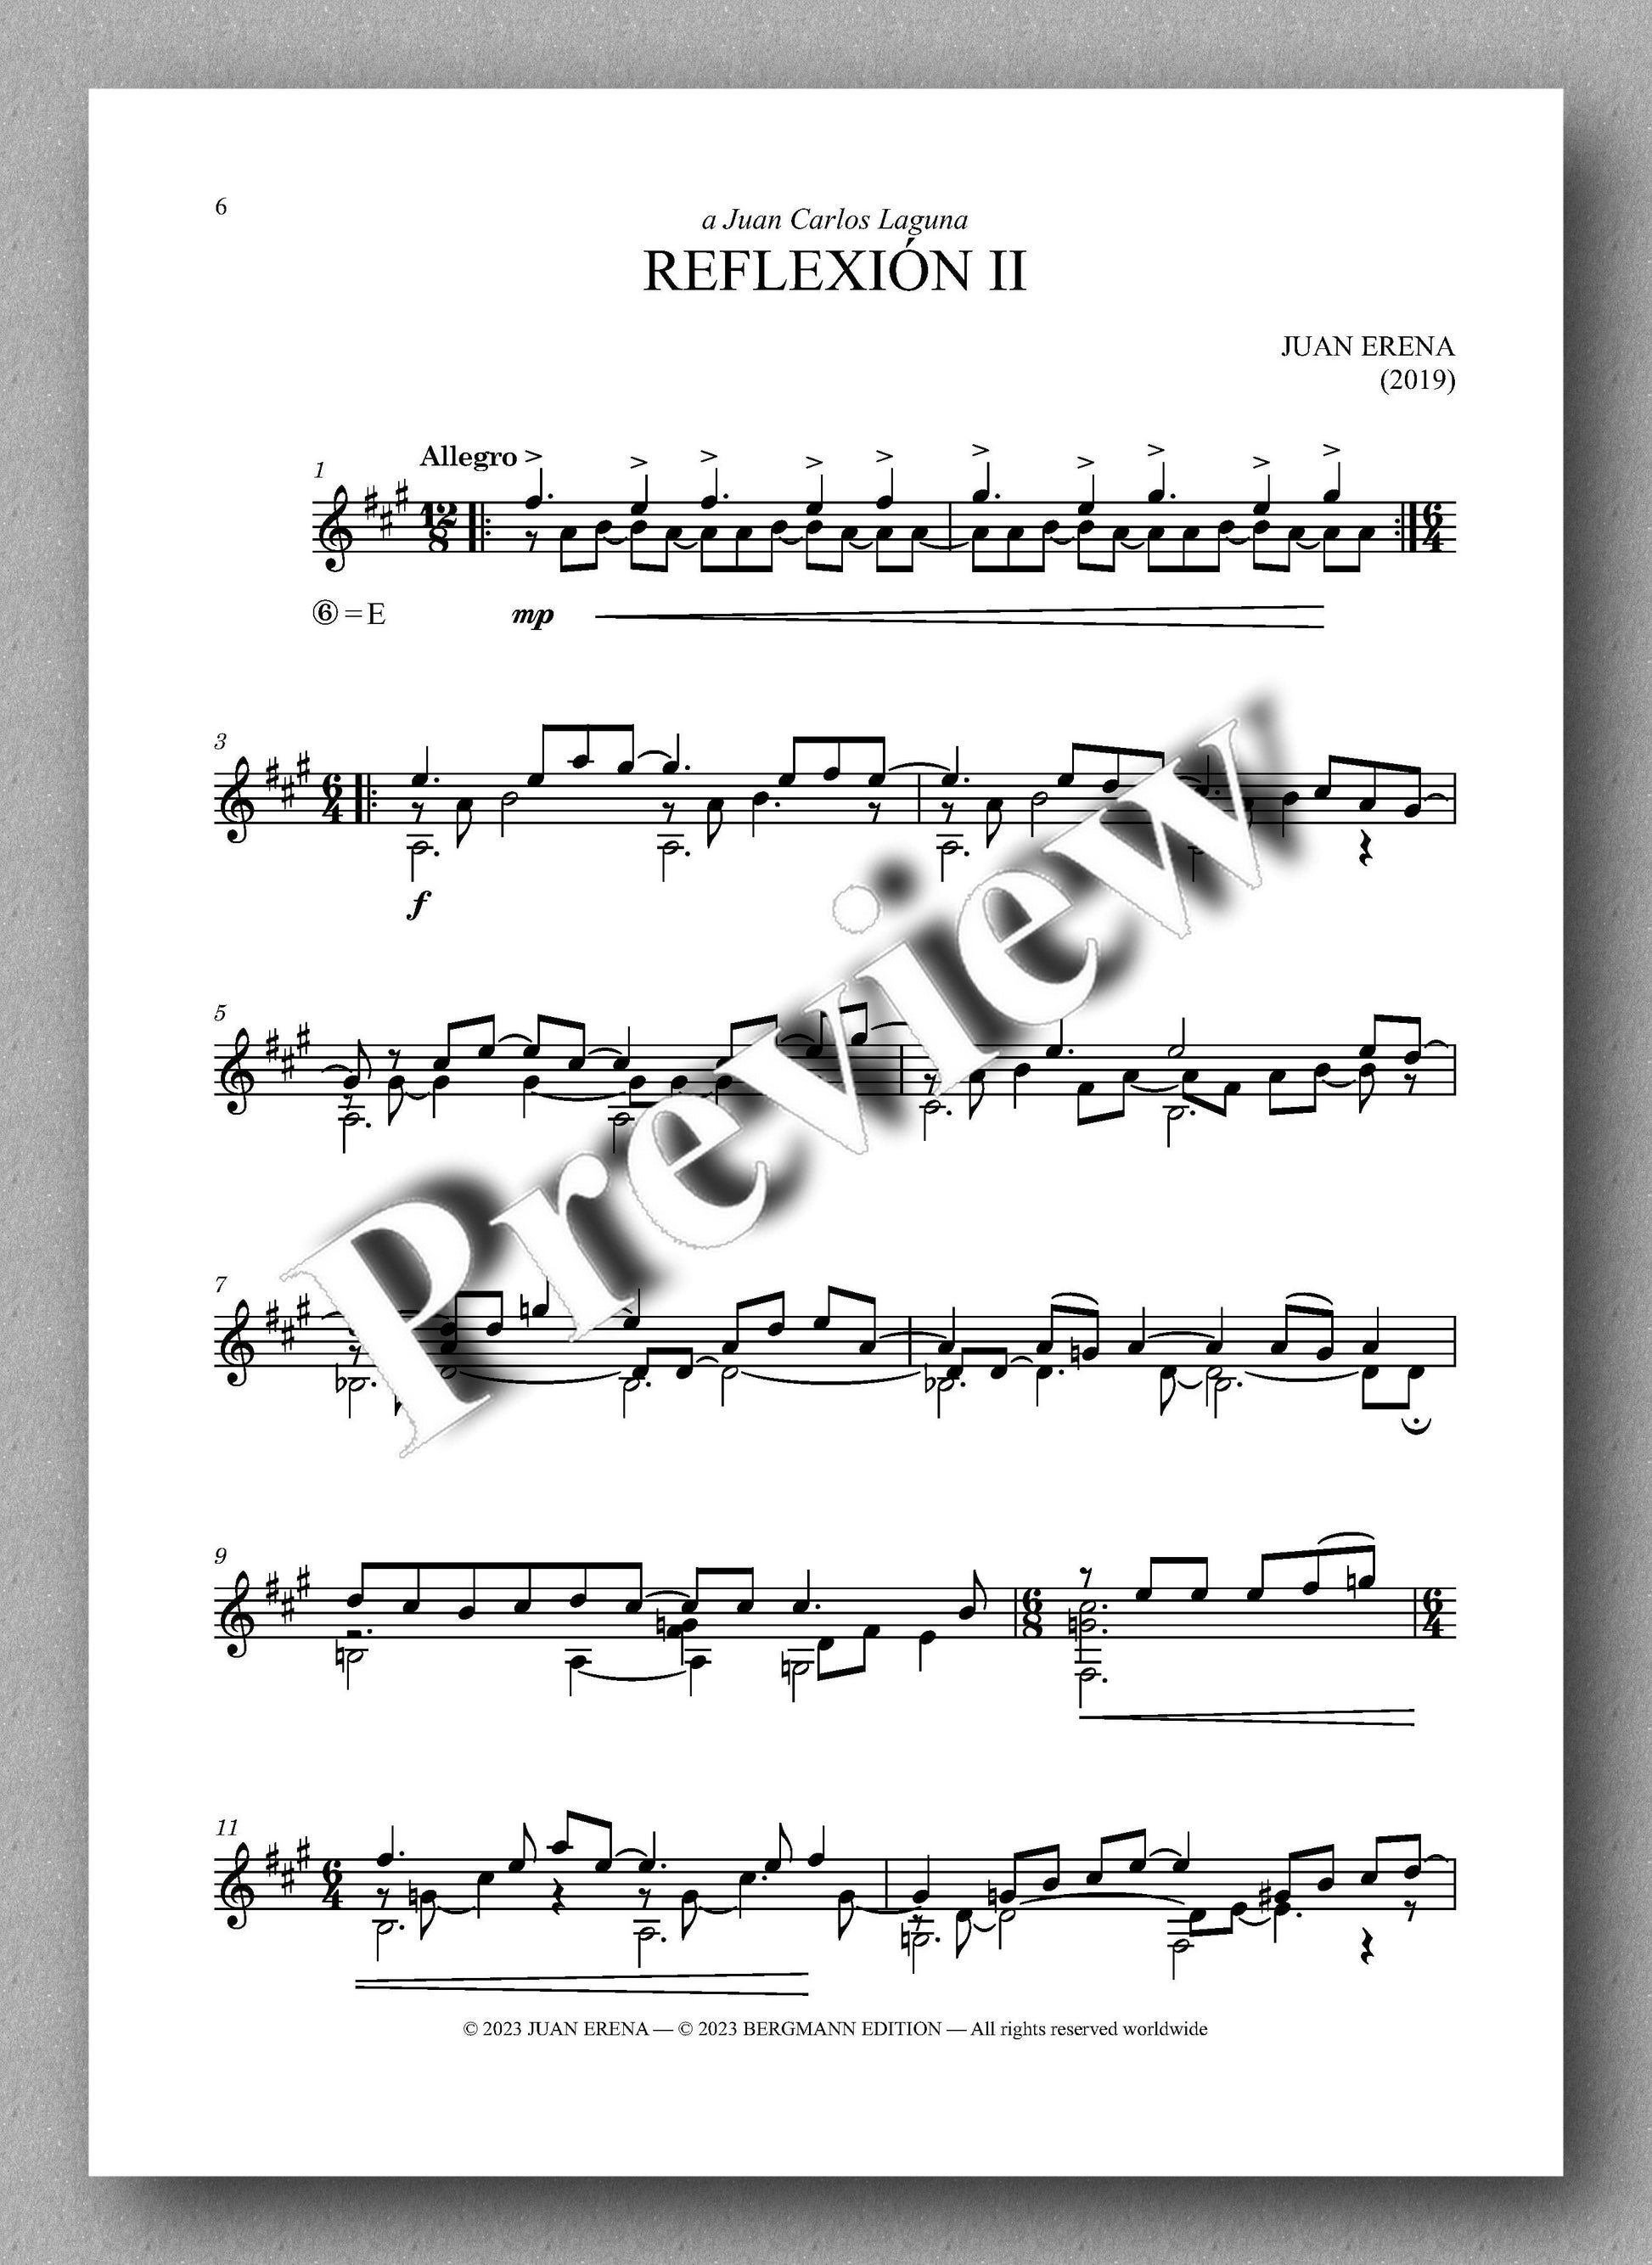 Juan Erena, DOS REFLEXIONES - preview of the music score 2